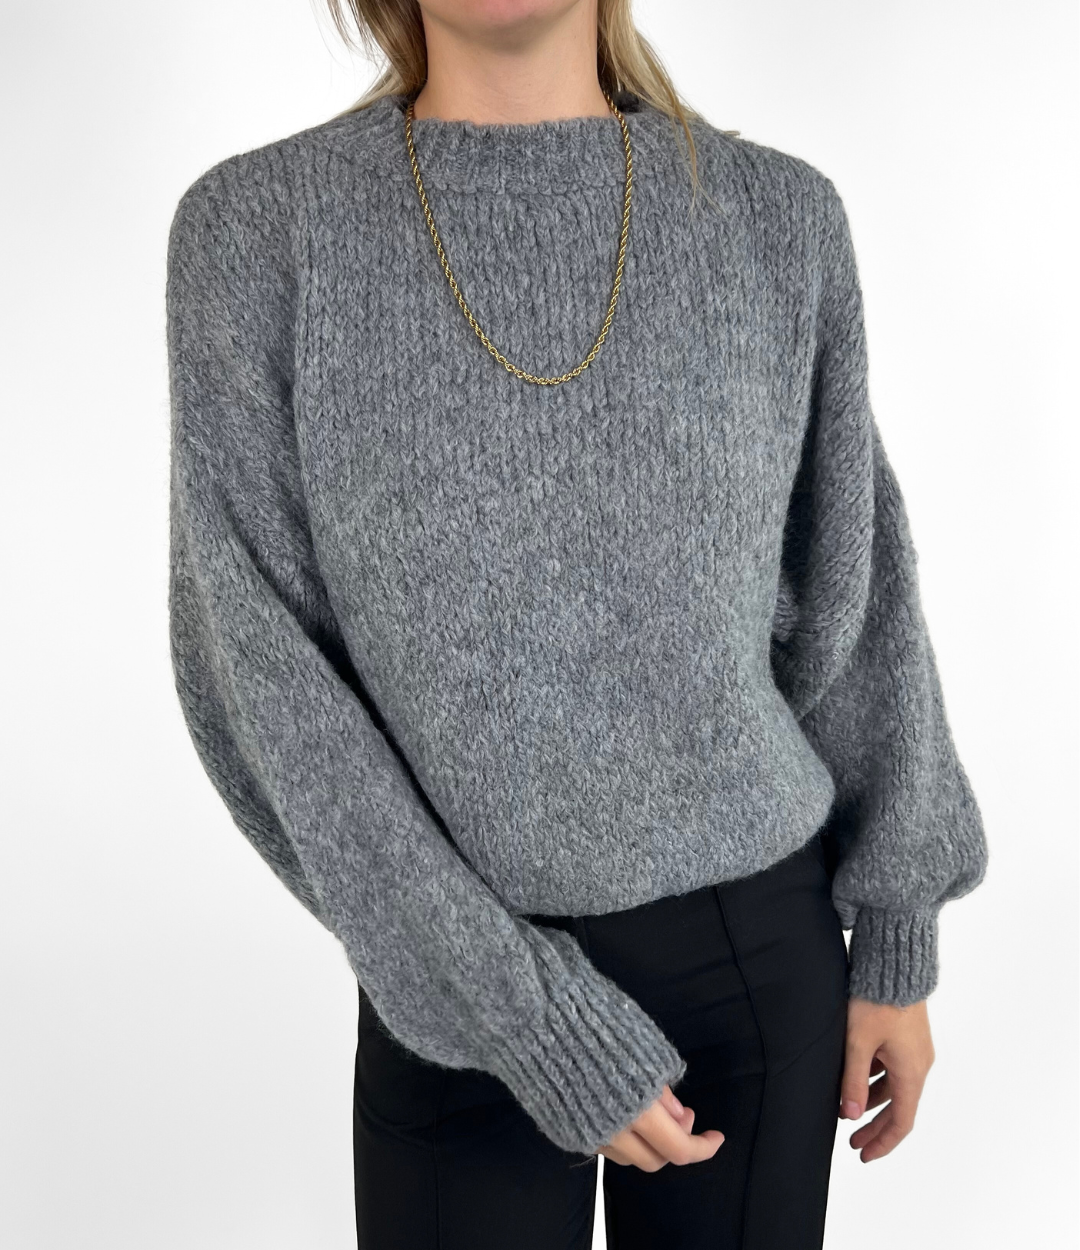 Knitted sweater June | Dark grey